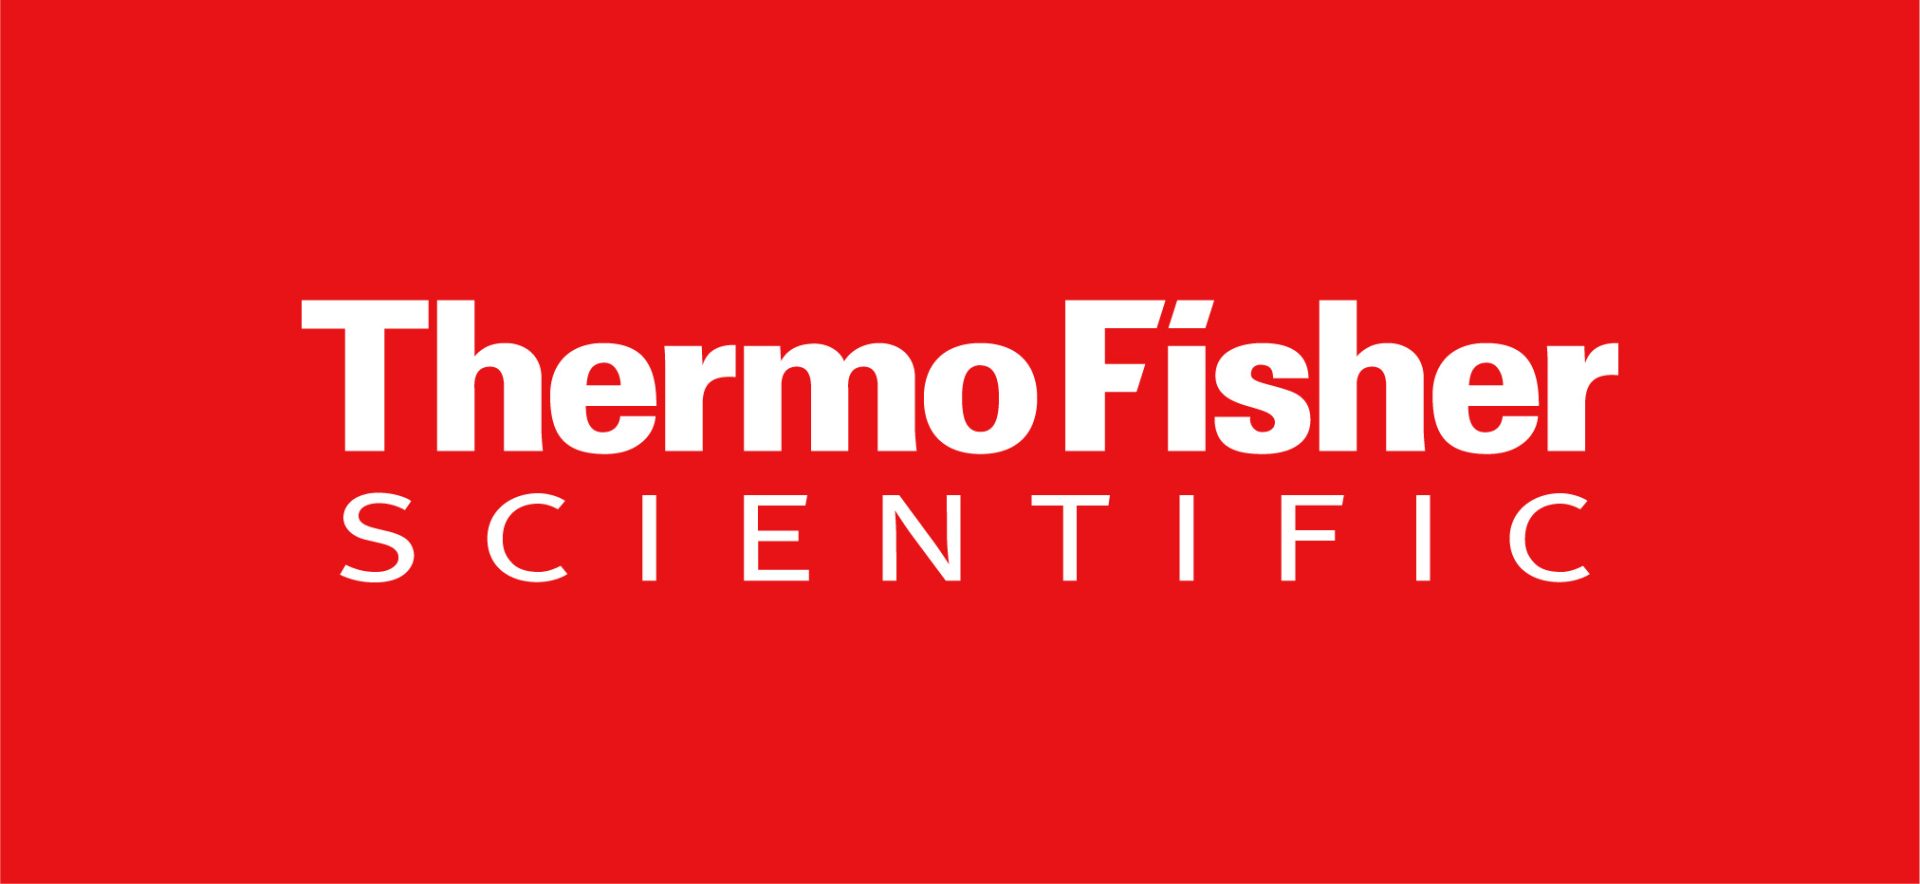 Thermo Fisher Scientific - Red BG